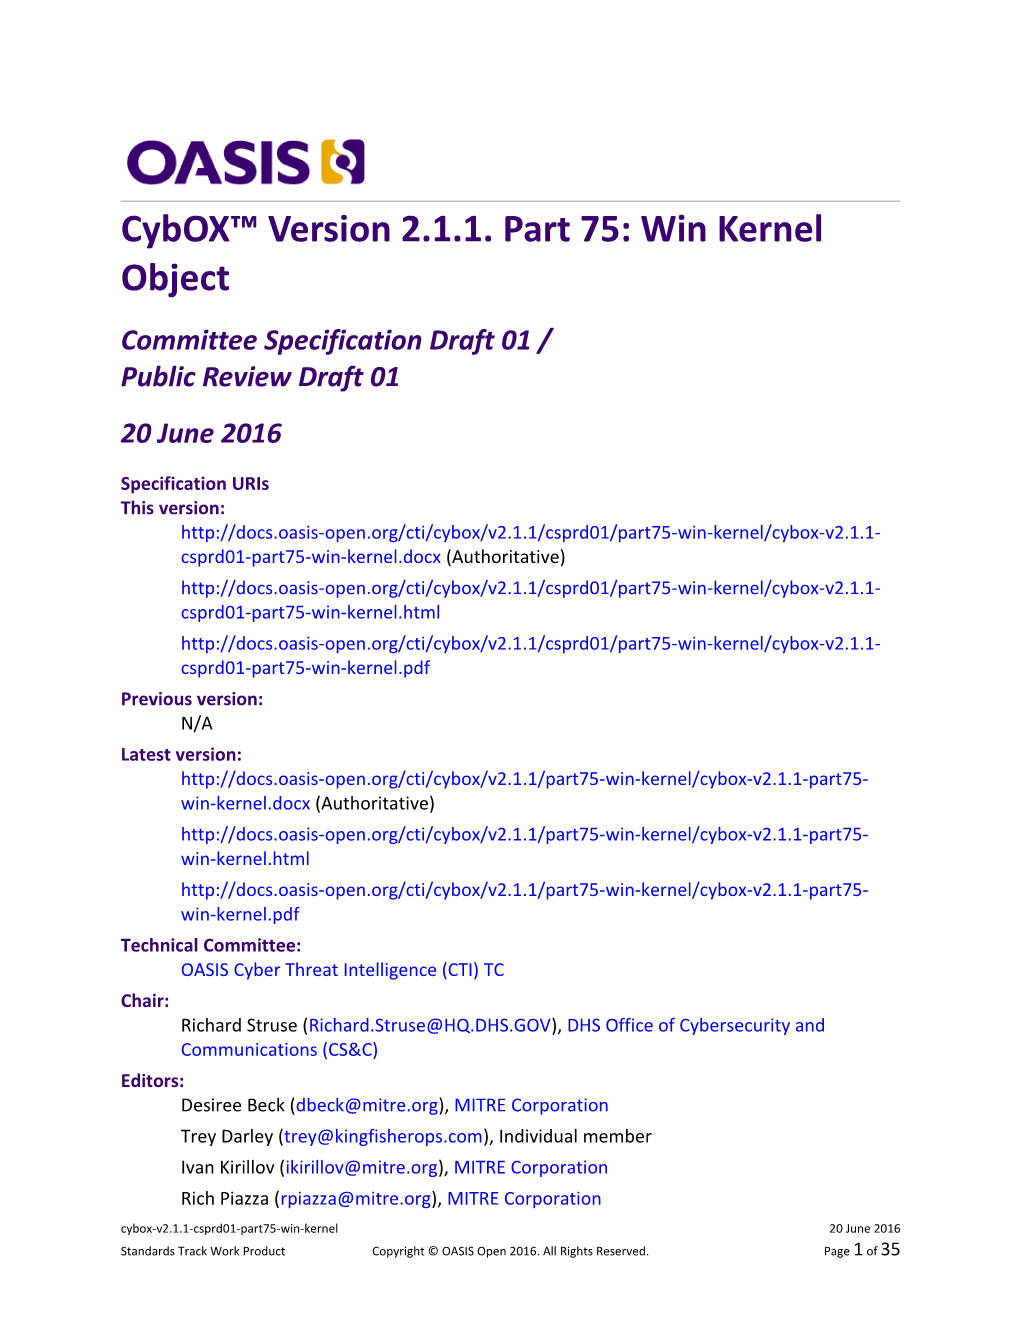 Cybox Version 2.1.1. Part 75: Win Kernel Object